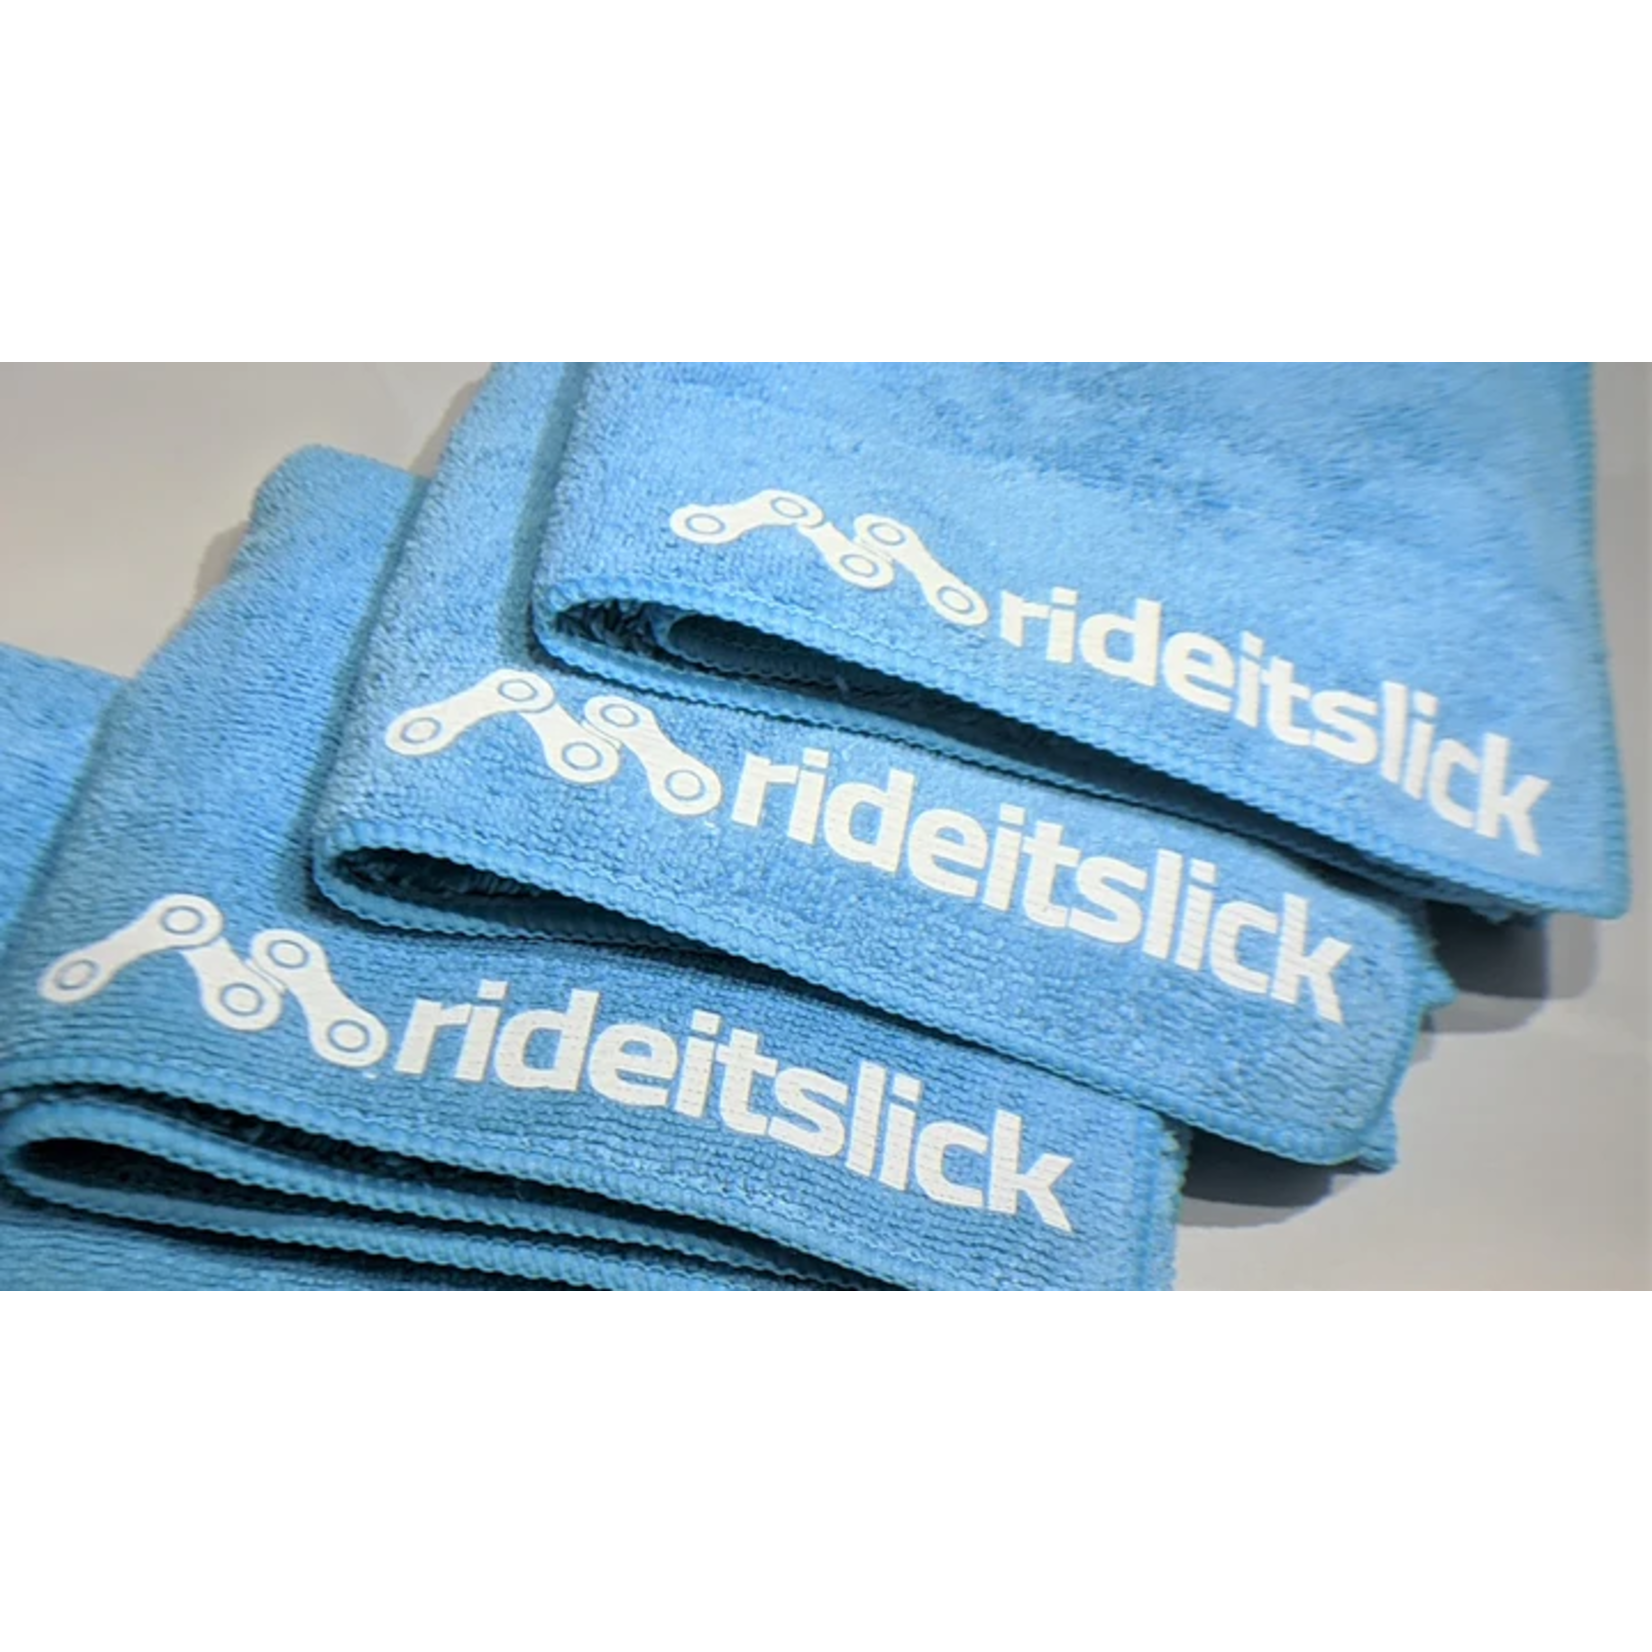 Scc Tech - Ride it Slick Plush Microfiber Towels - (3 Pack)